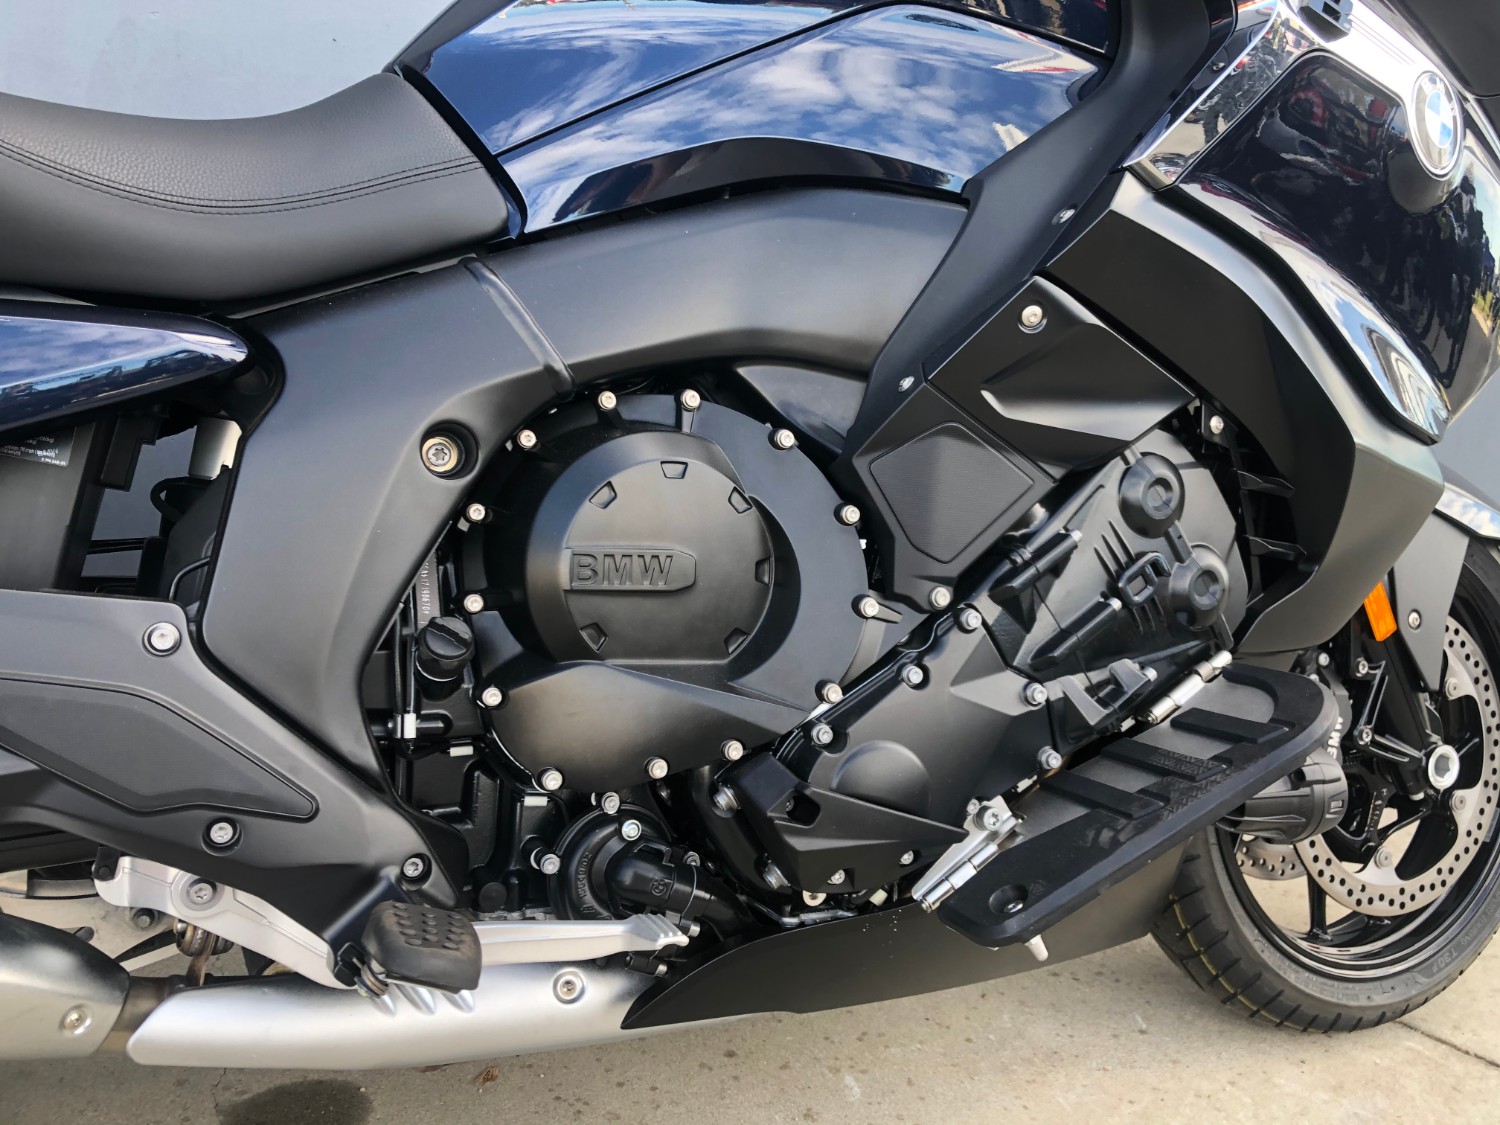 2019 BMW K1600 B Deluxe Motorcycle Image 20